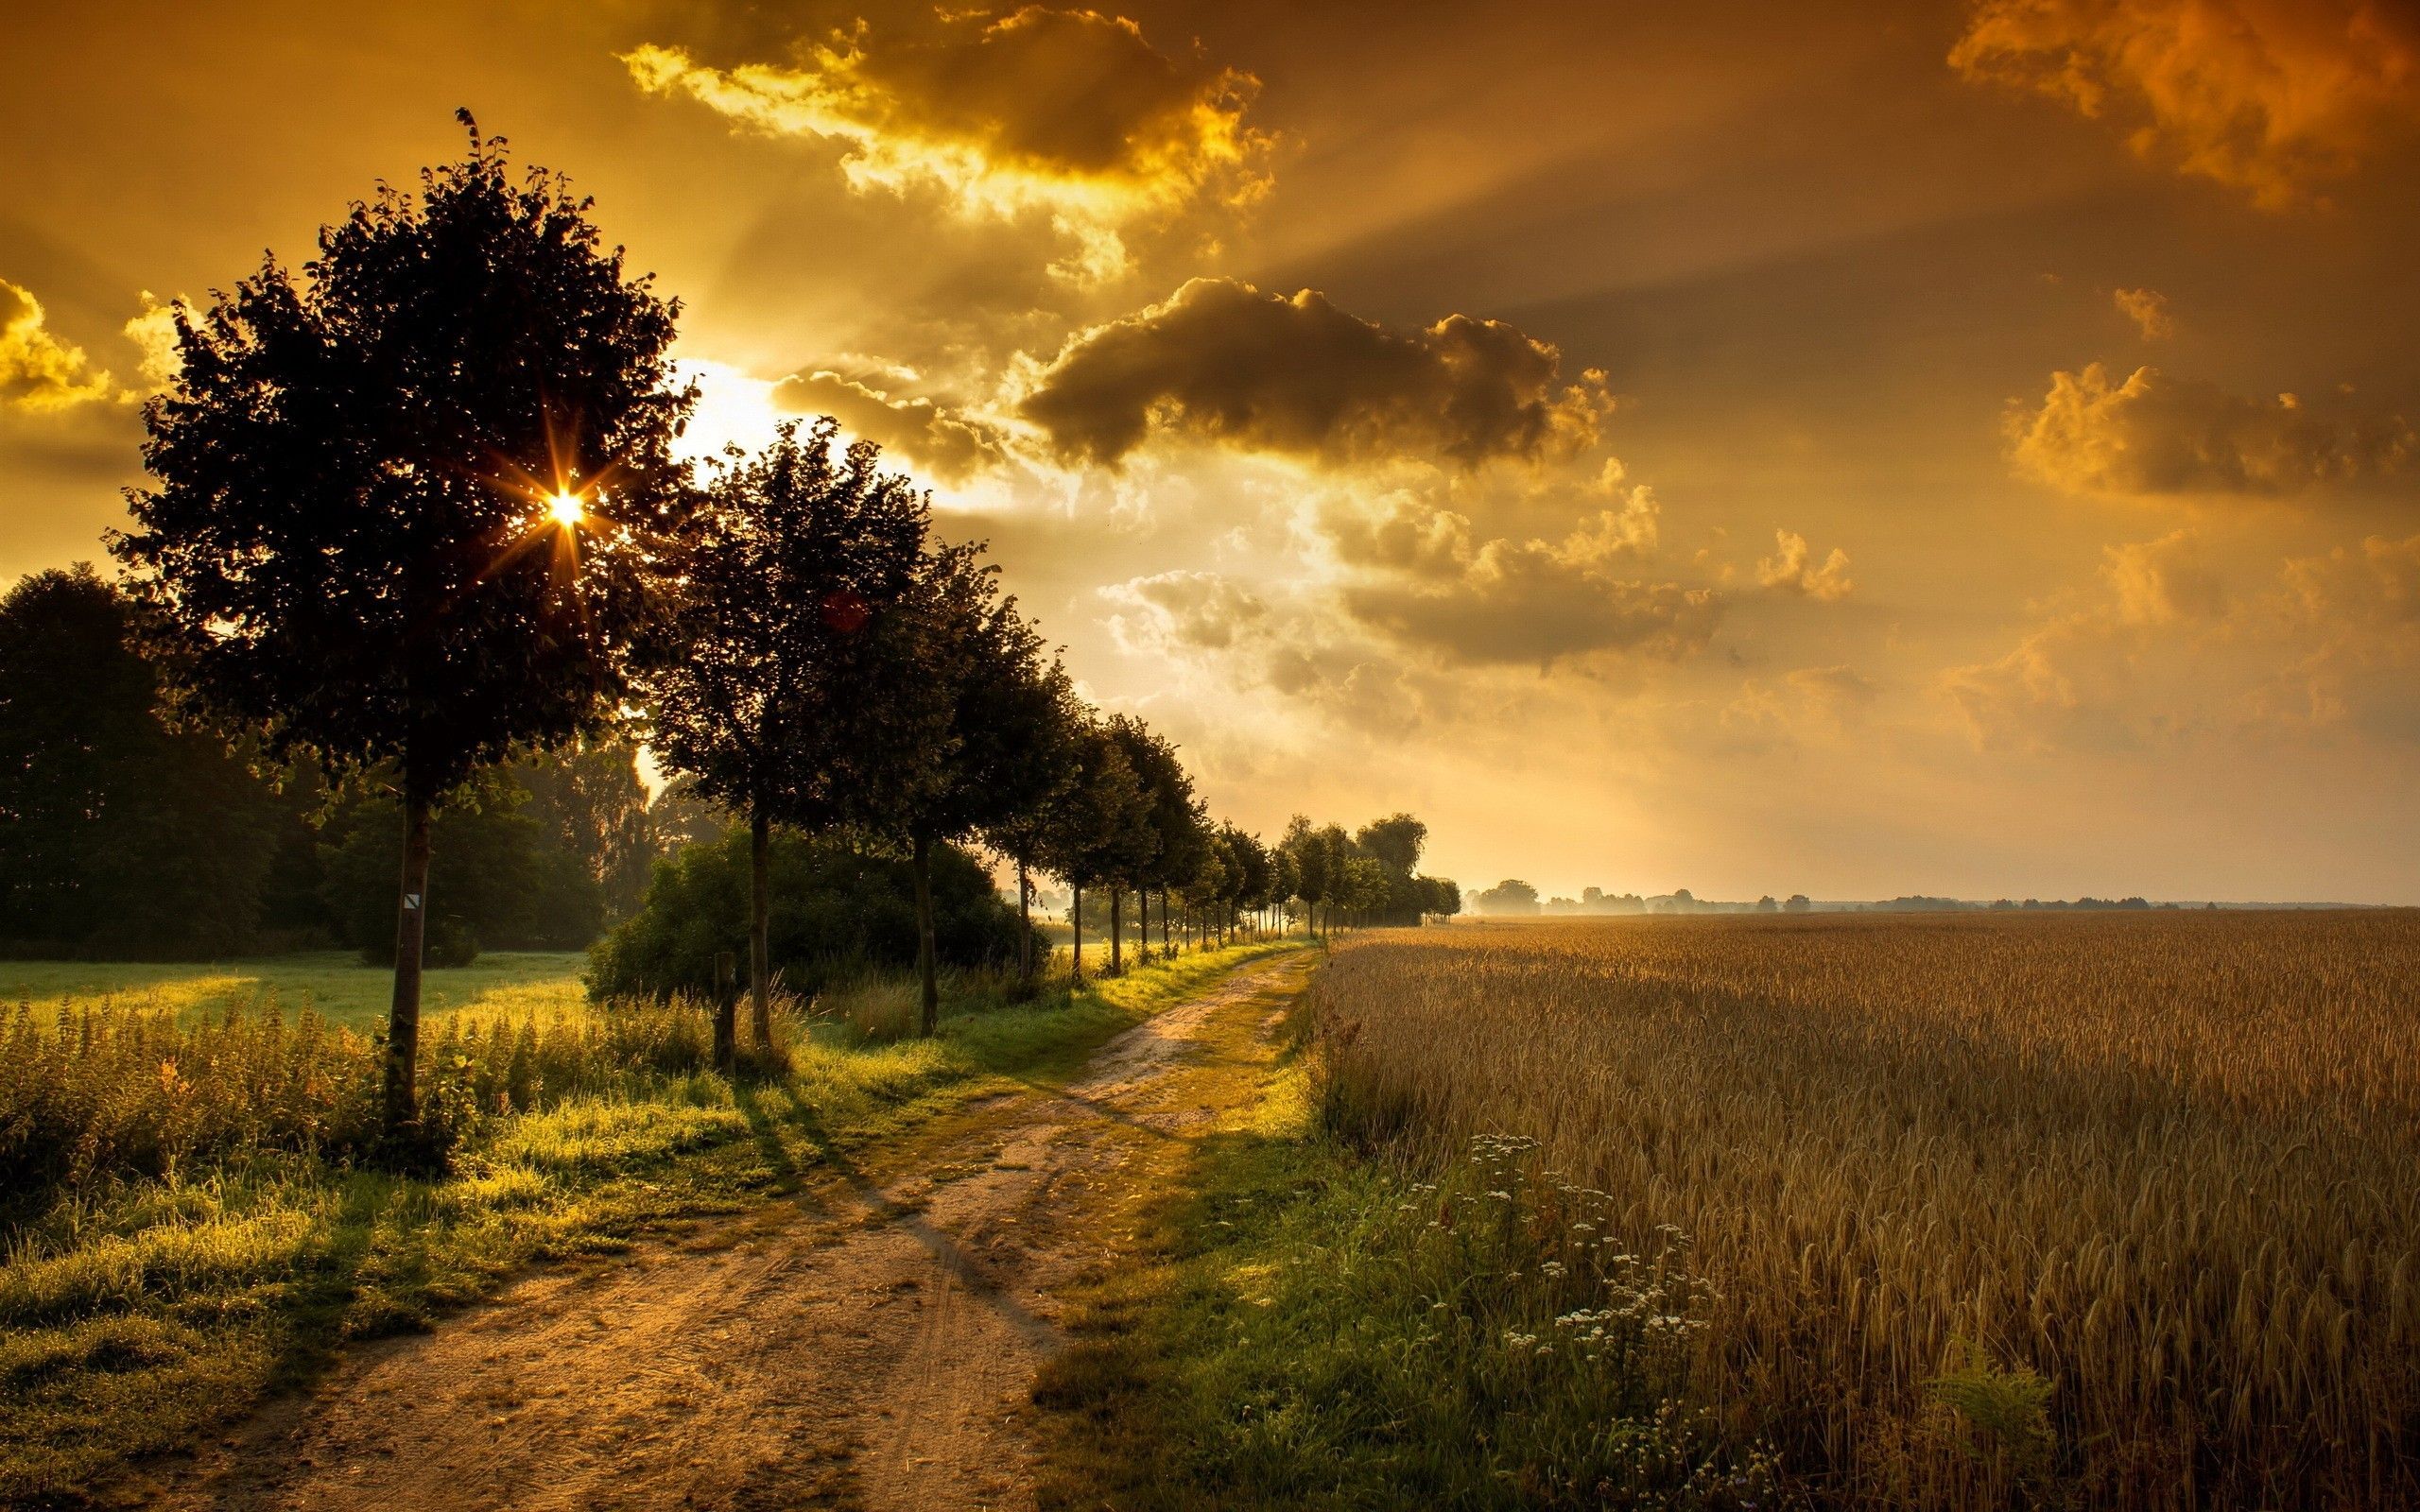 #shadow, #sunset, #path, #clouds, #landscape, #dirt road